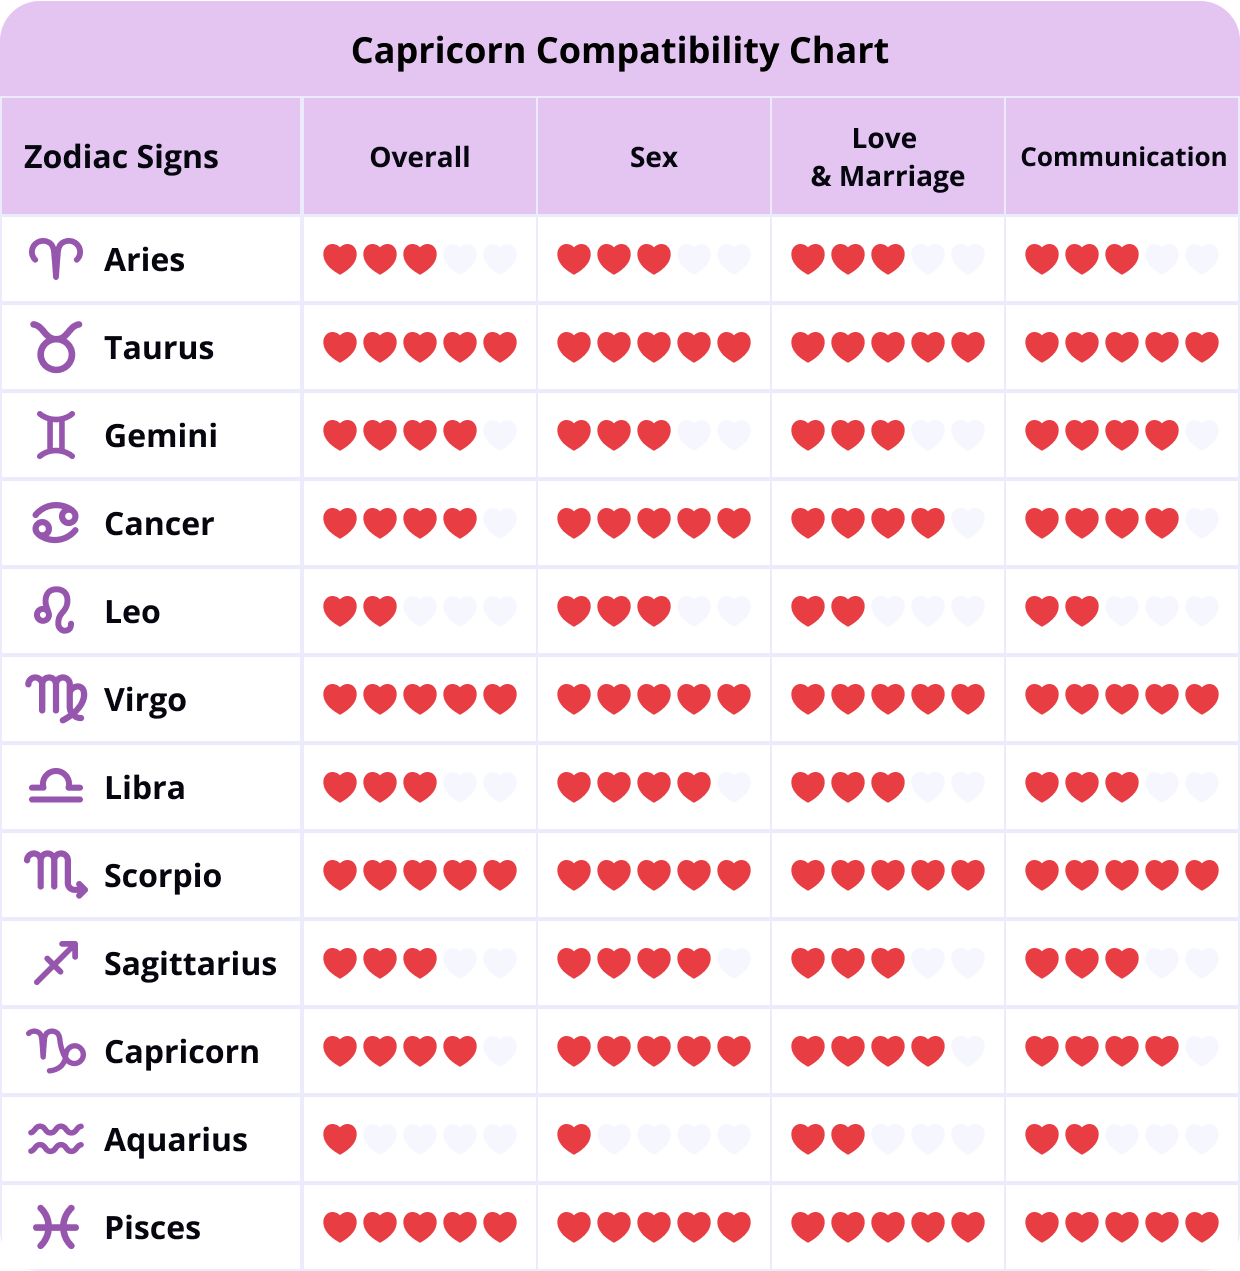 Capricorn Compatibility Chart